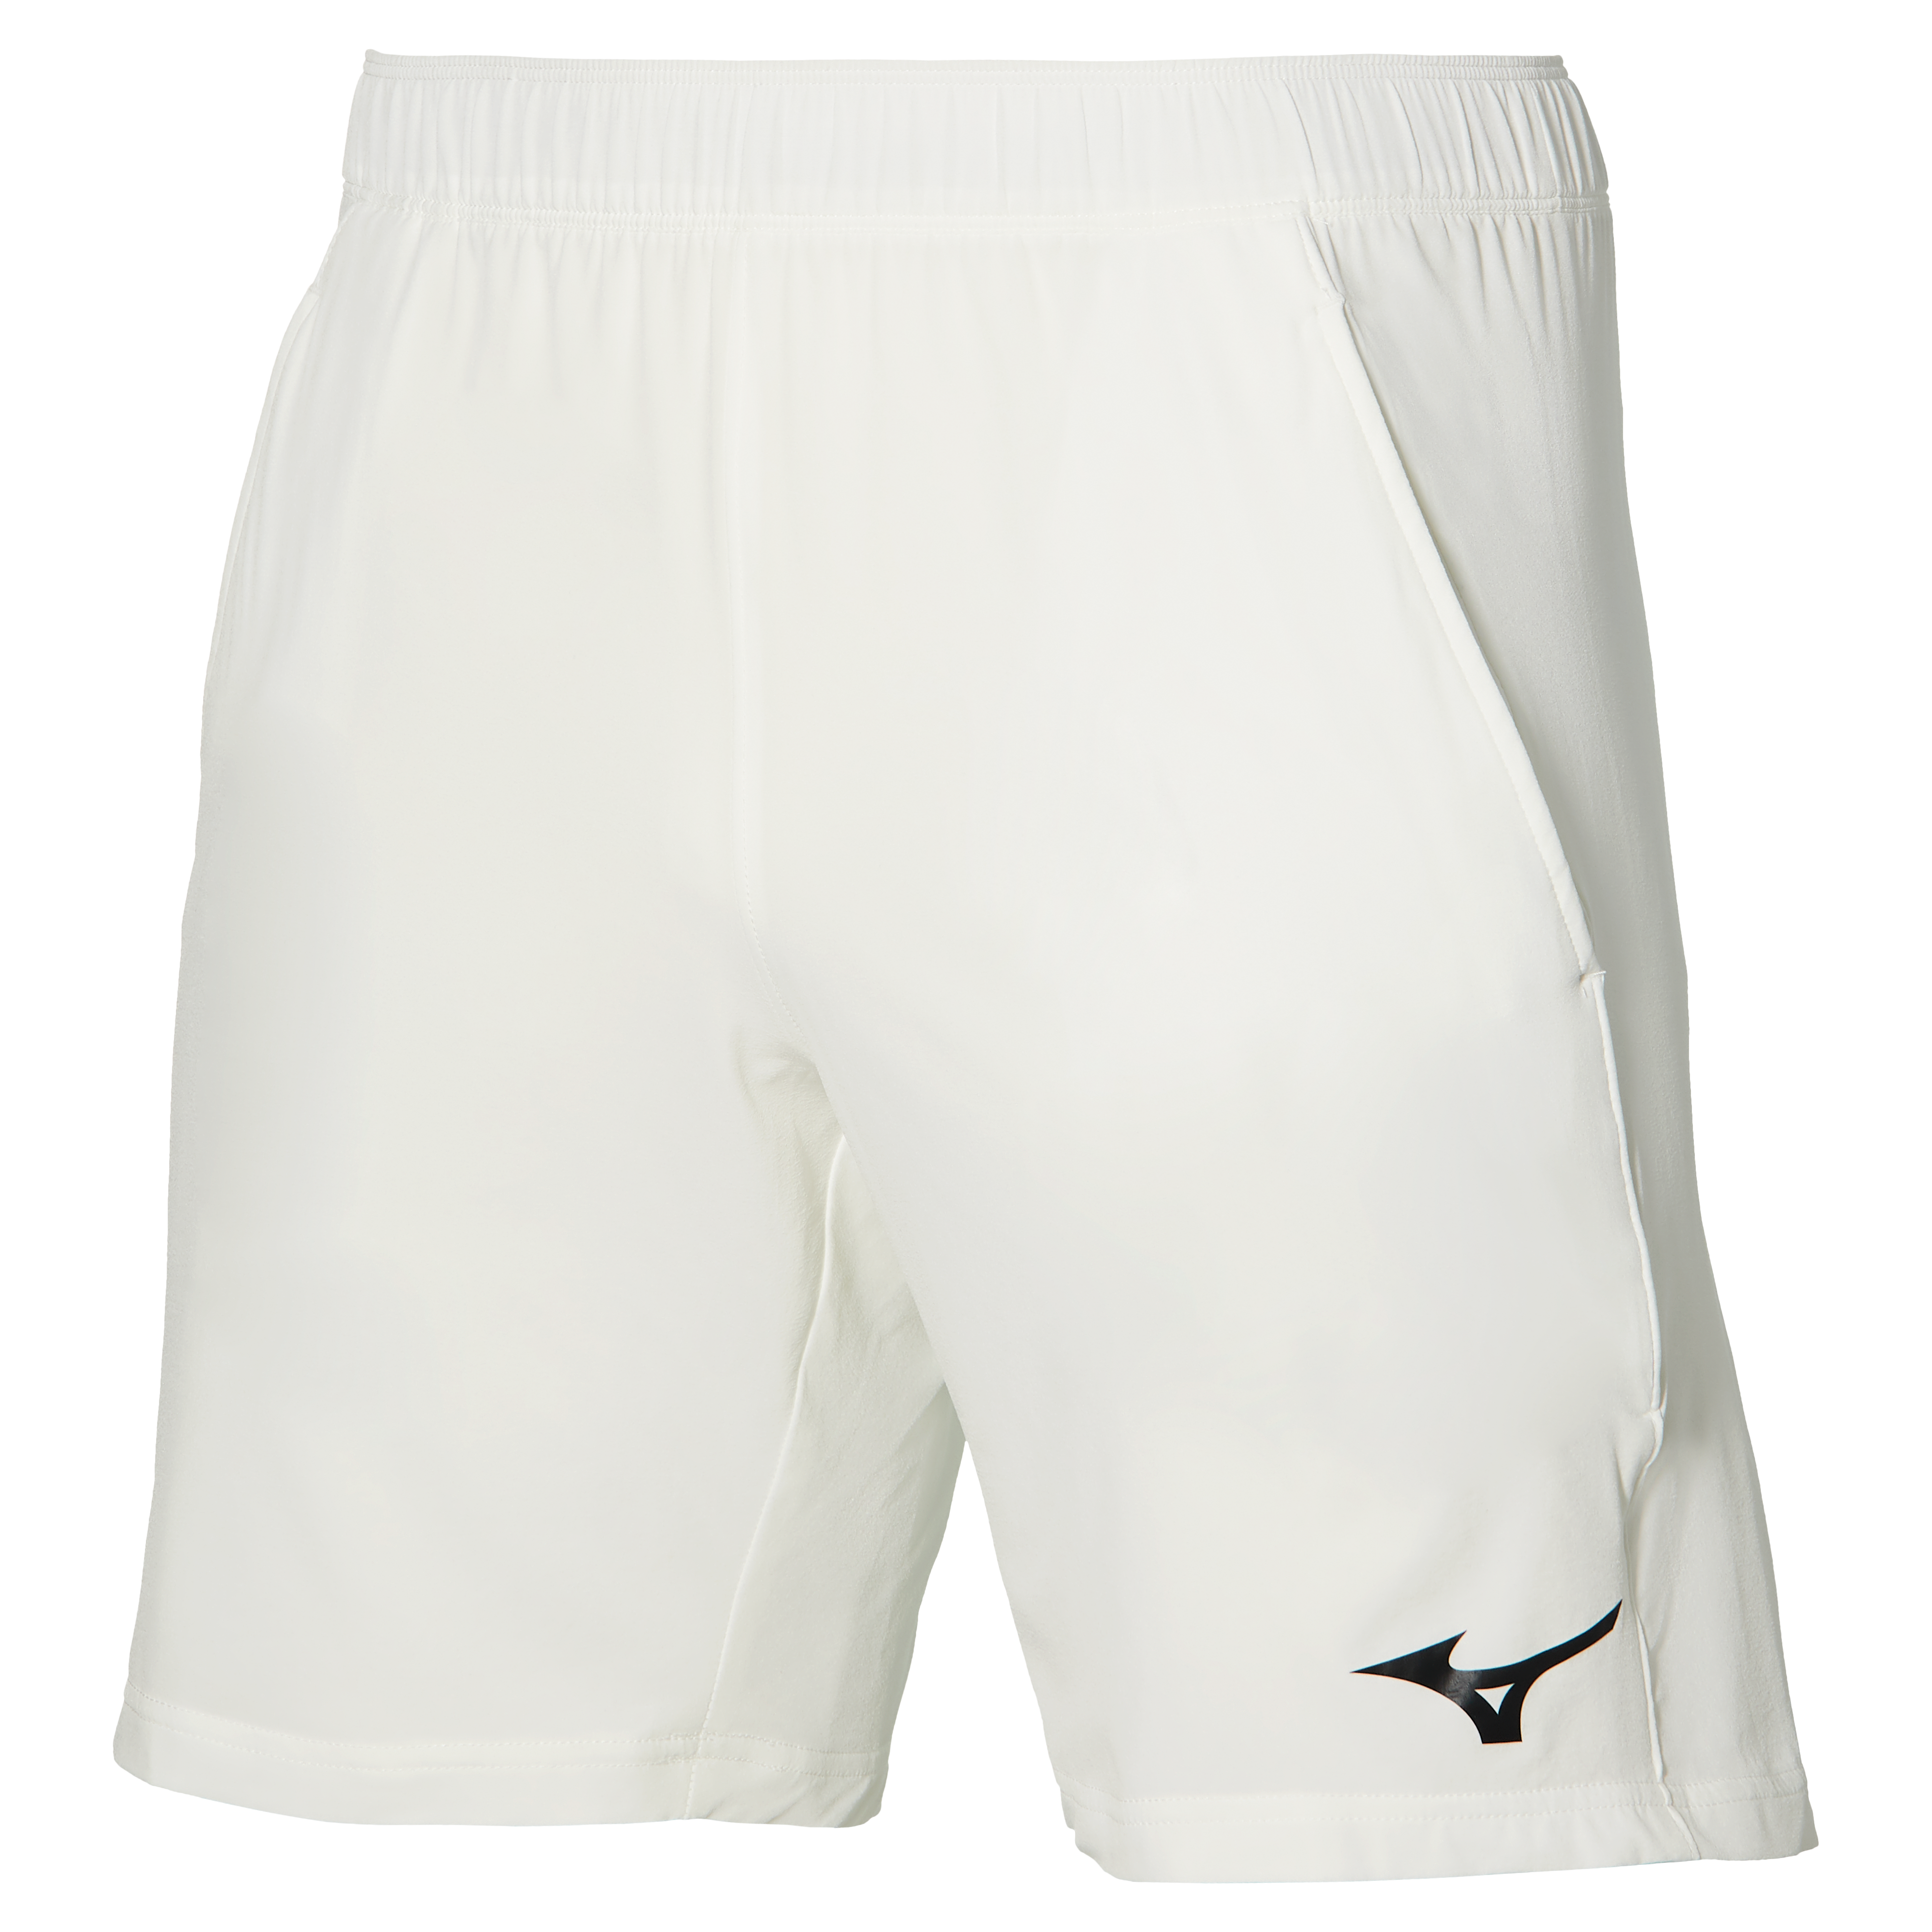 Mizuno 8" Flex Shorts (Mens, Hvid) - Padellife.dk